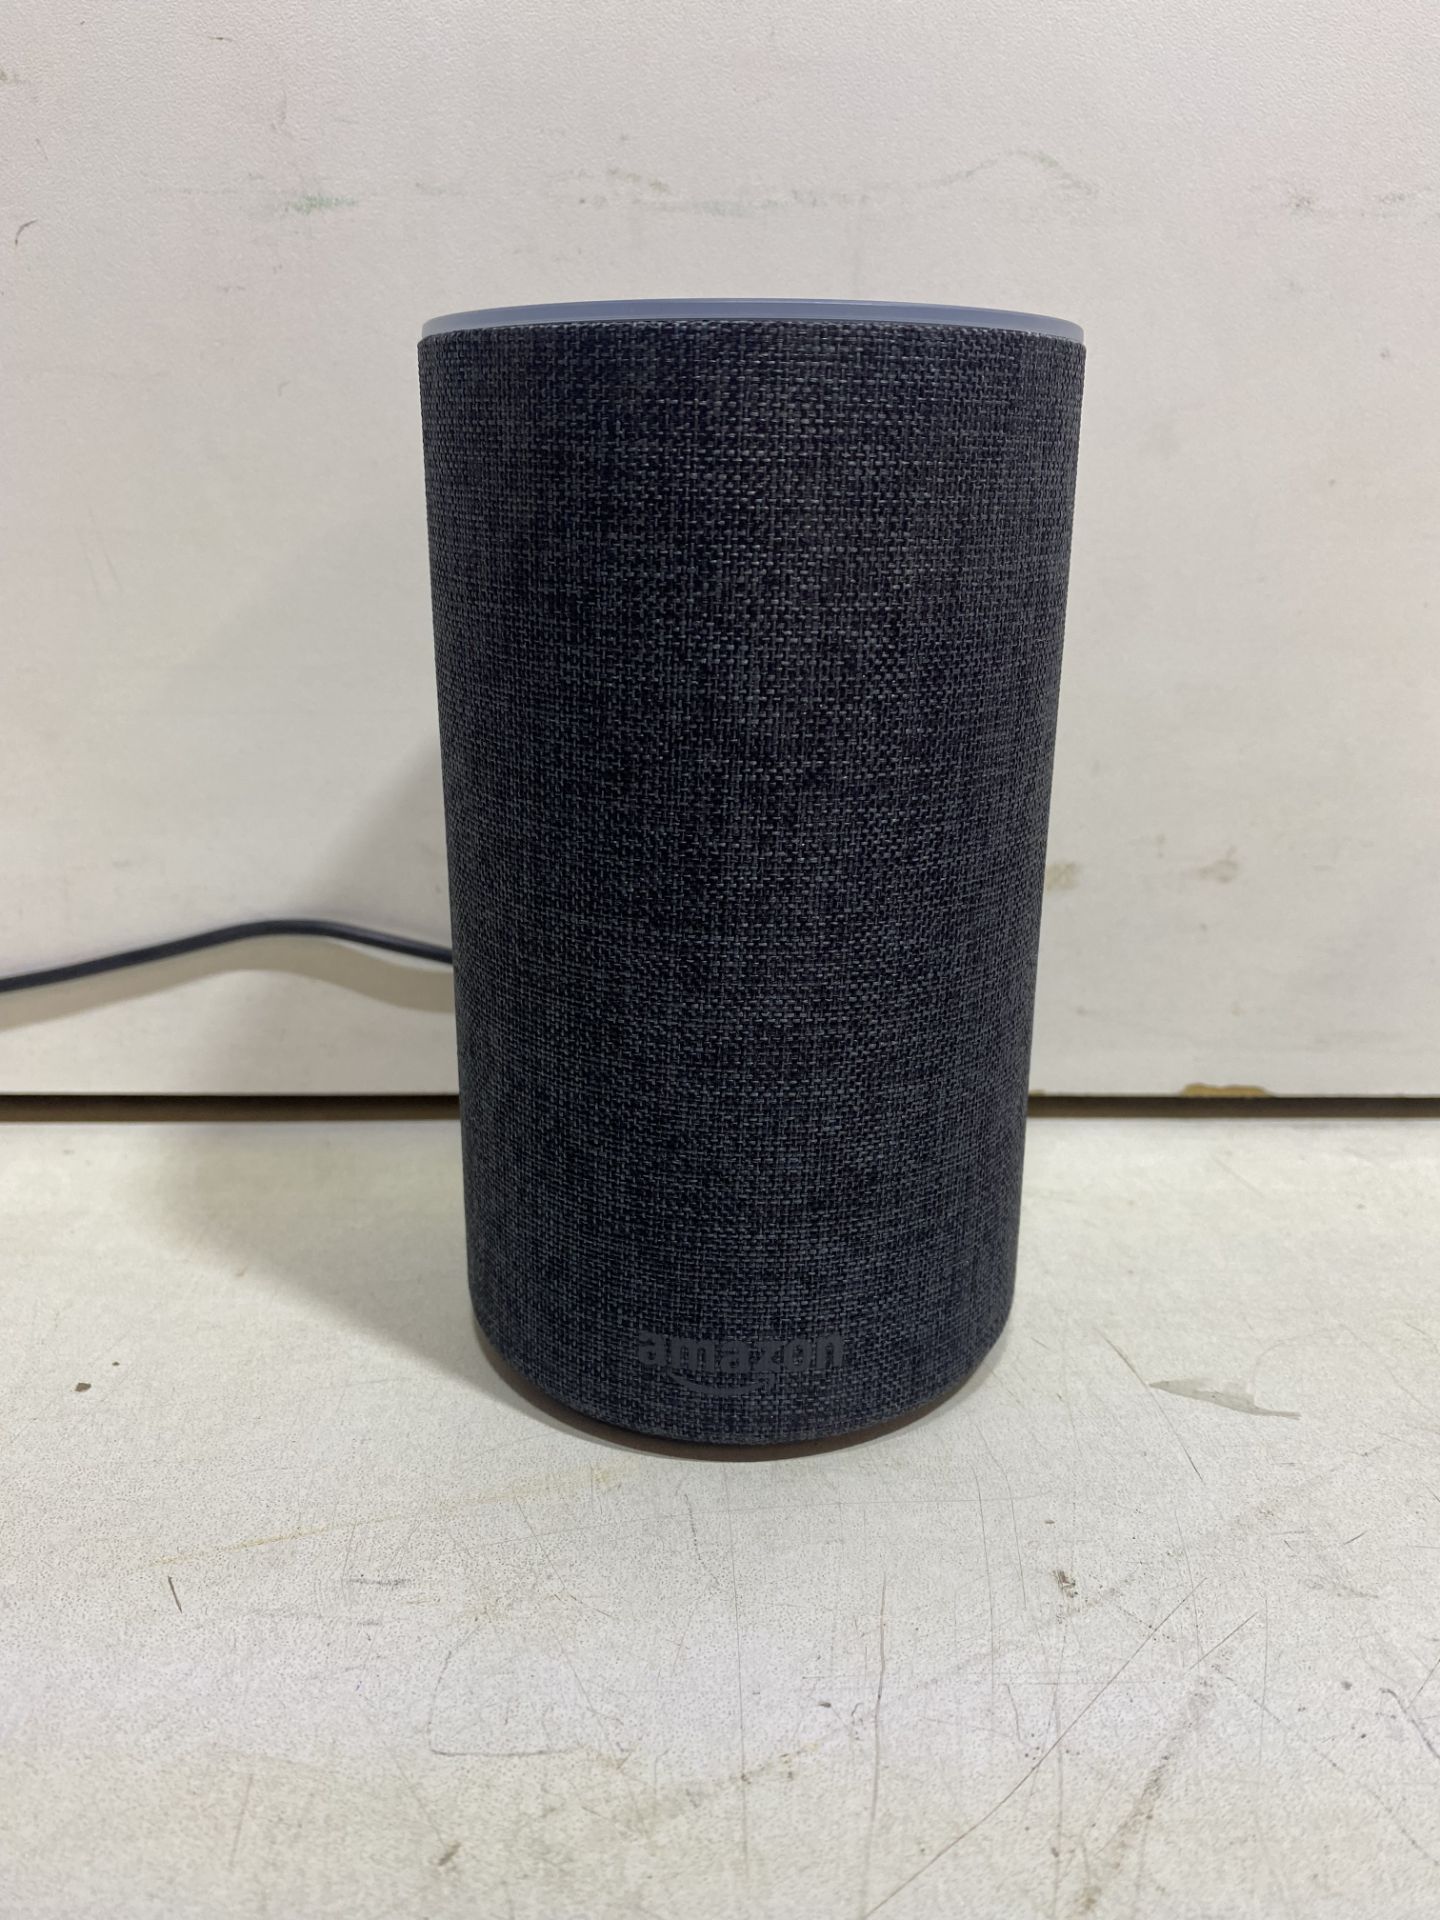 Amazon Echo Smart Speaker With Alexa